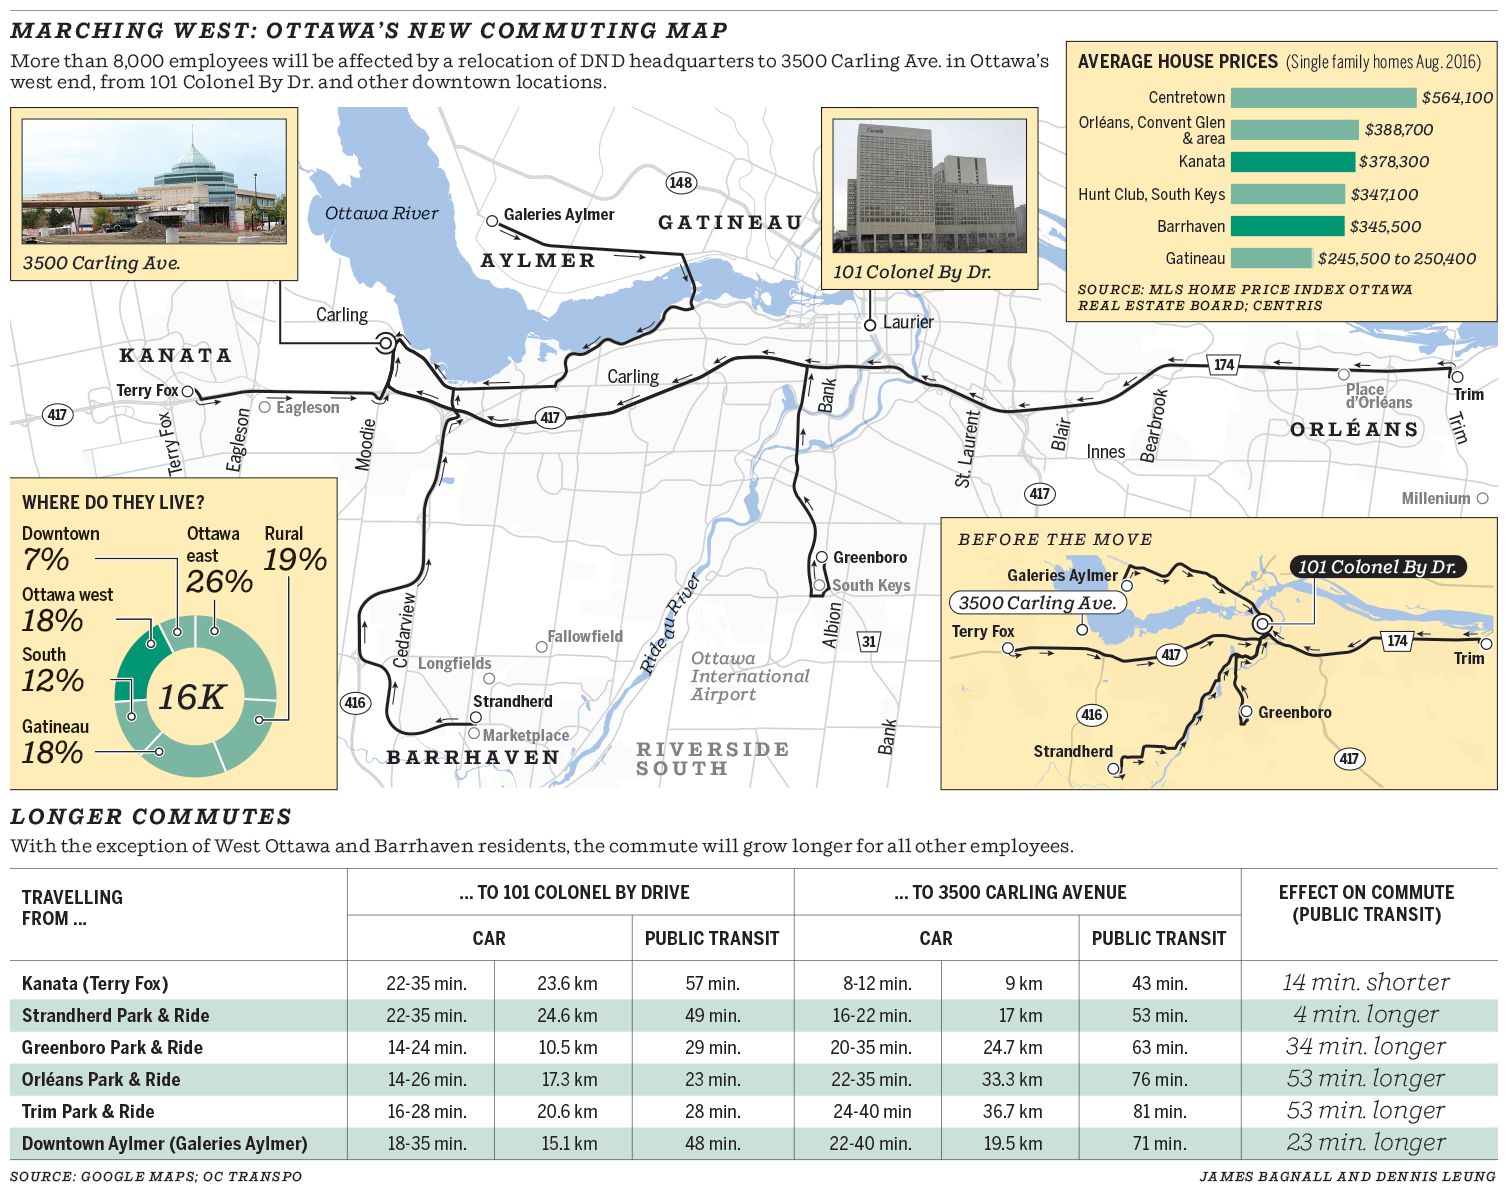 Marching west - Ottawa's new commuting map